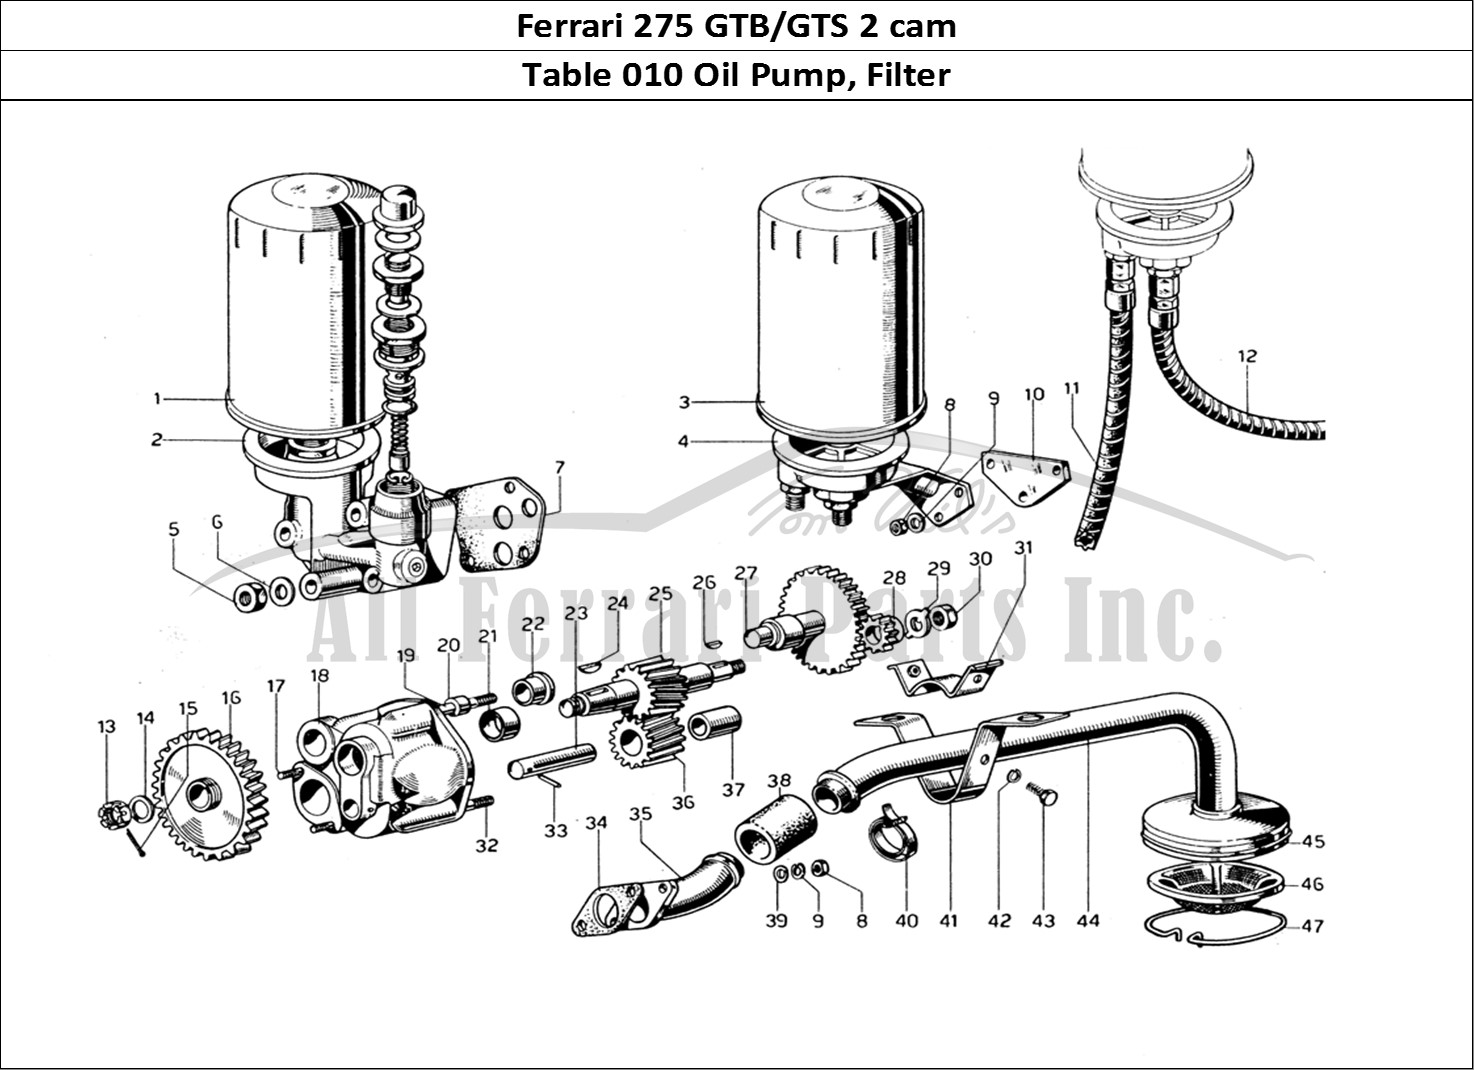 Ferrari Parts Ferrari 275 GTB/GTS 2 cam Page 010 Oil Pump & Filters